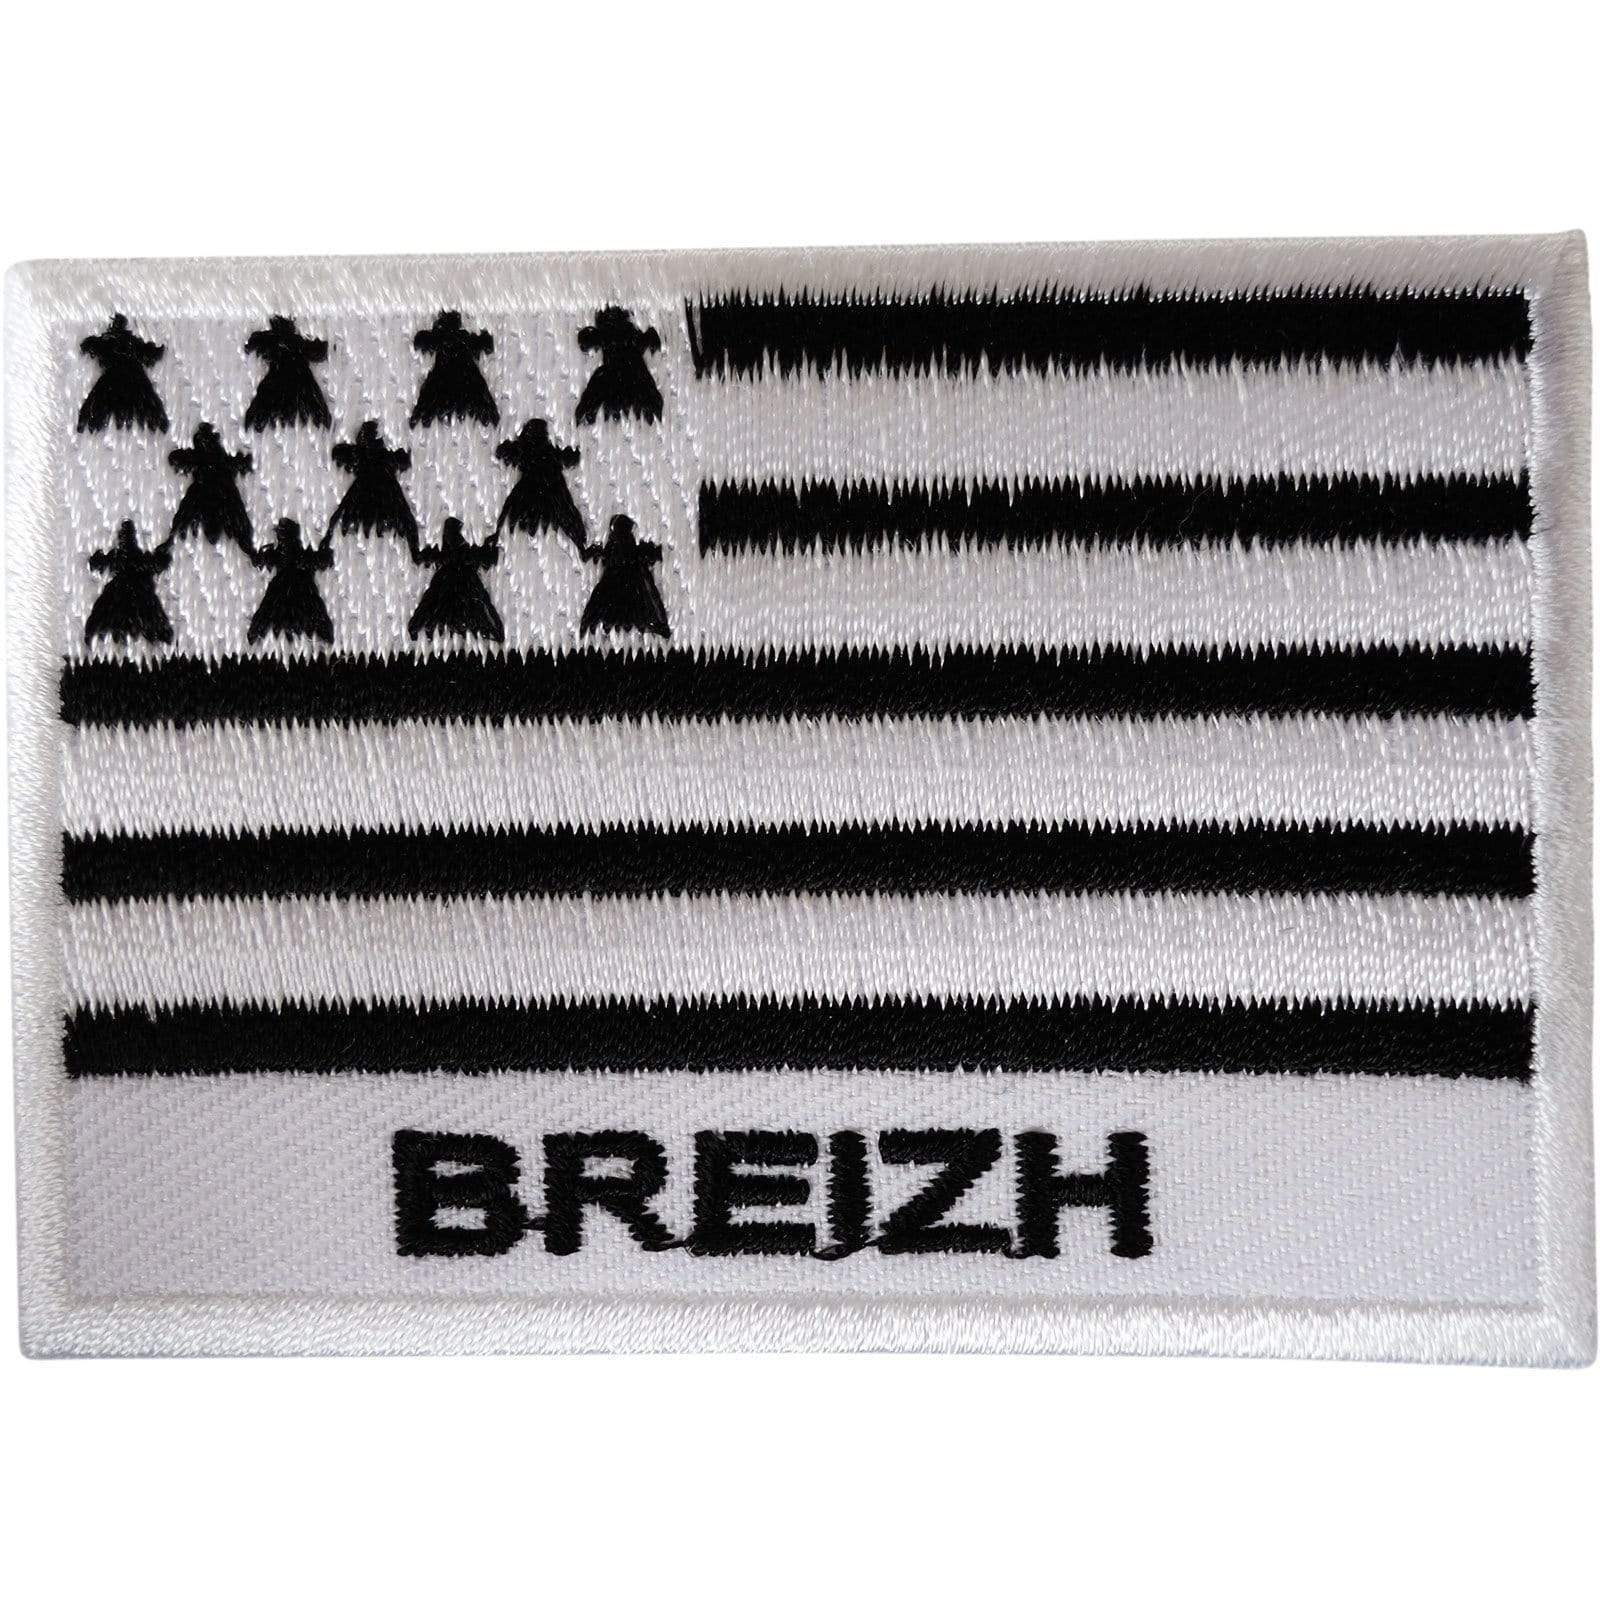 Breizh Flag Patch Iron Sew On Embroidered Brittany France Badge Breton Bretagne